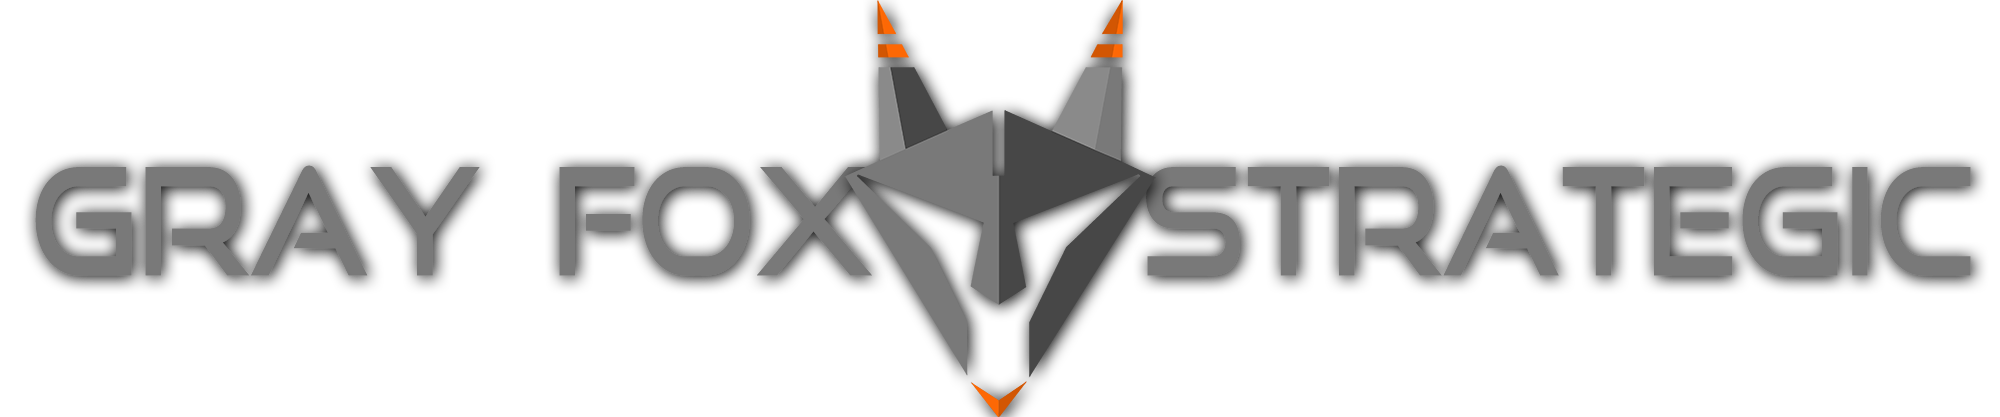 Gray Fox Strategic Inc